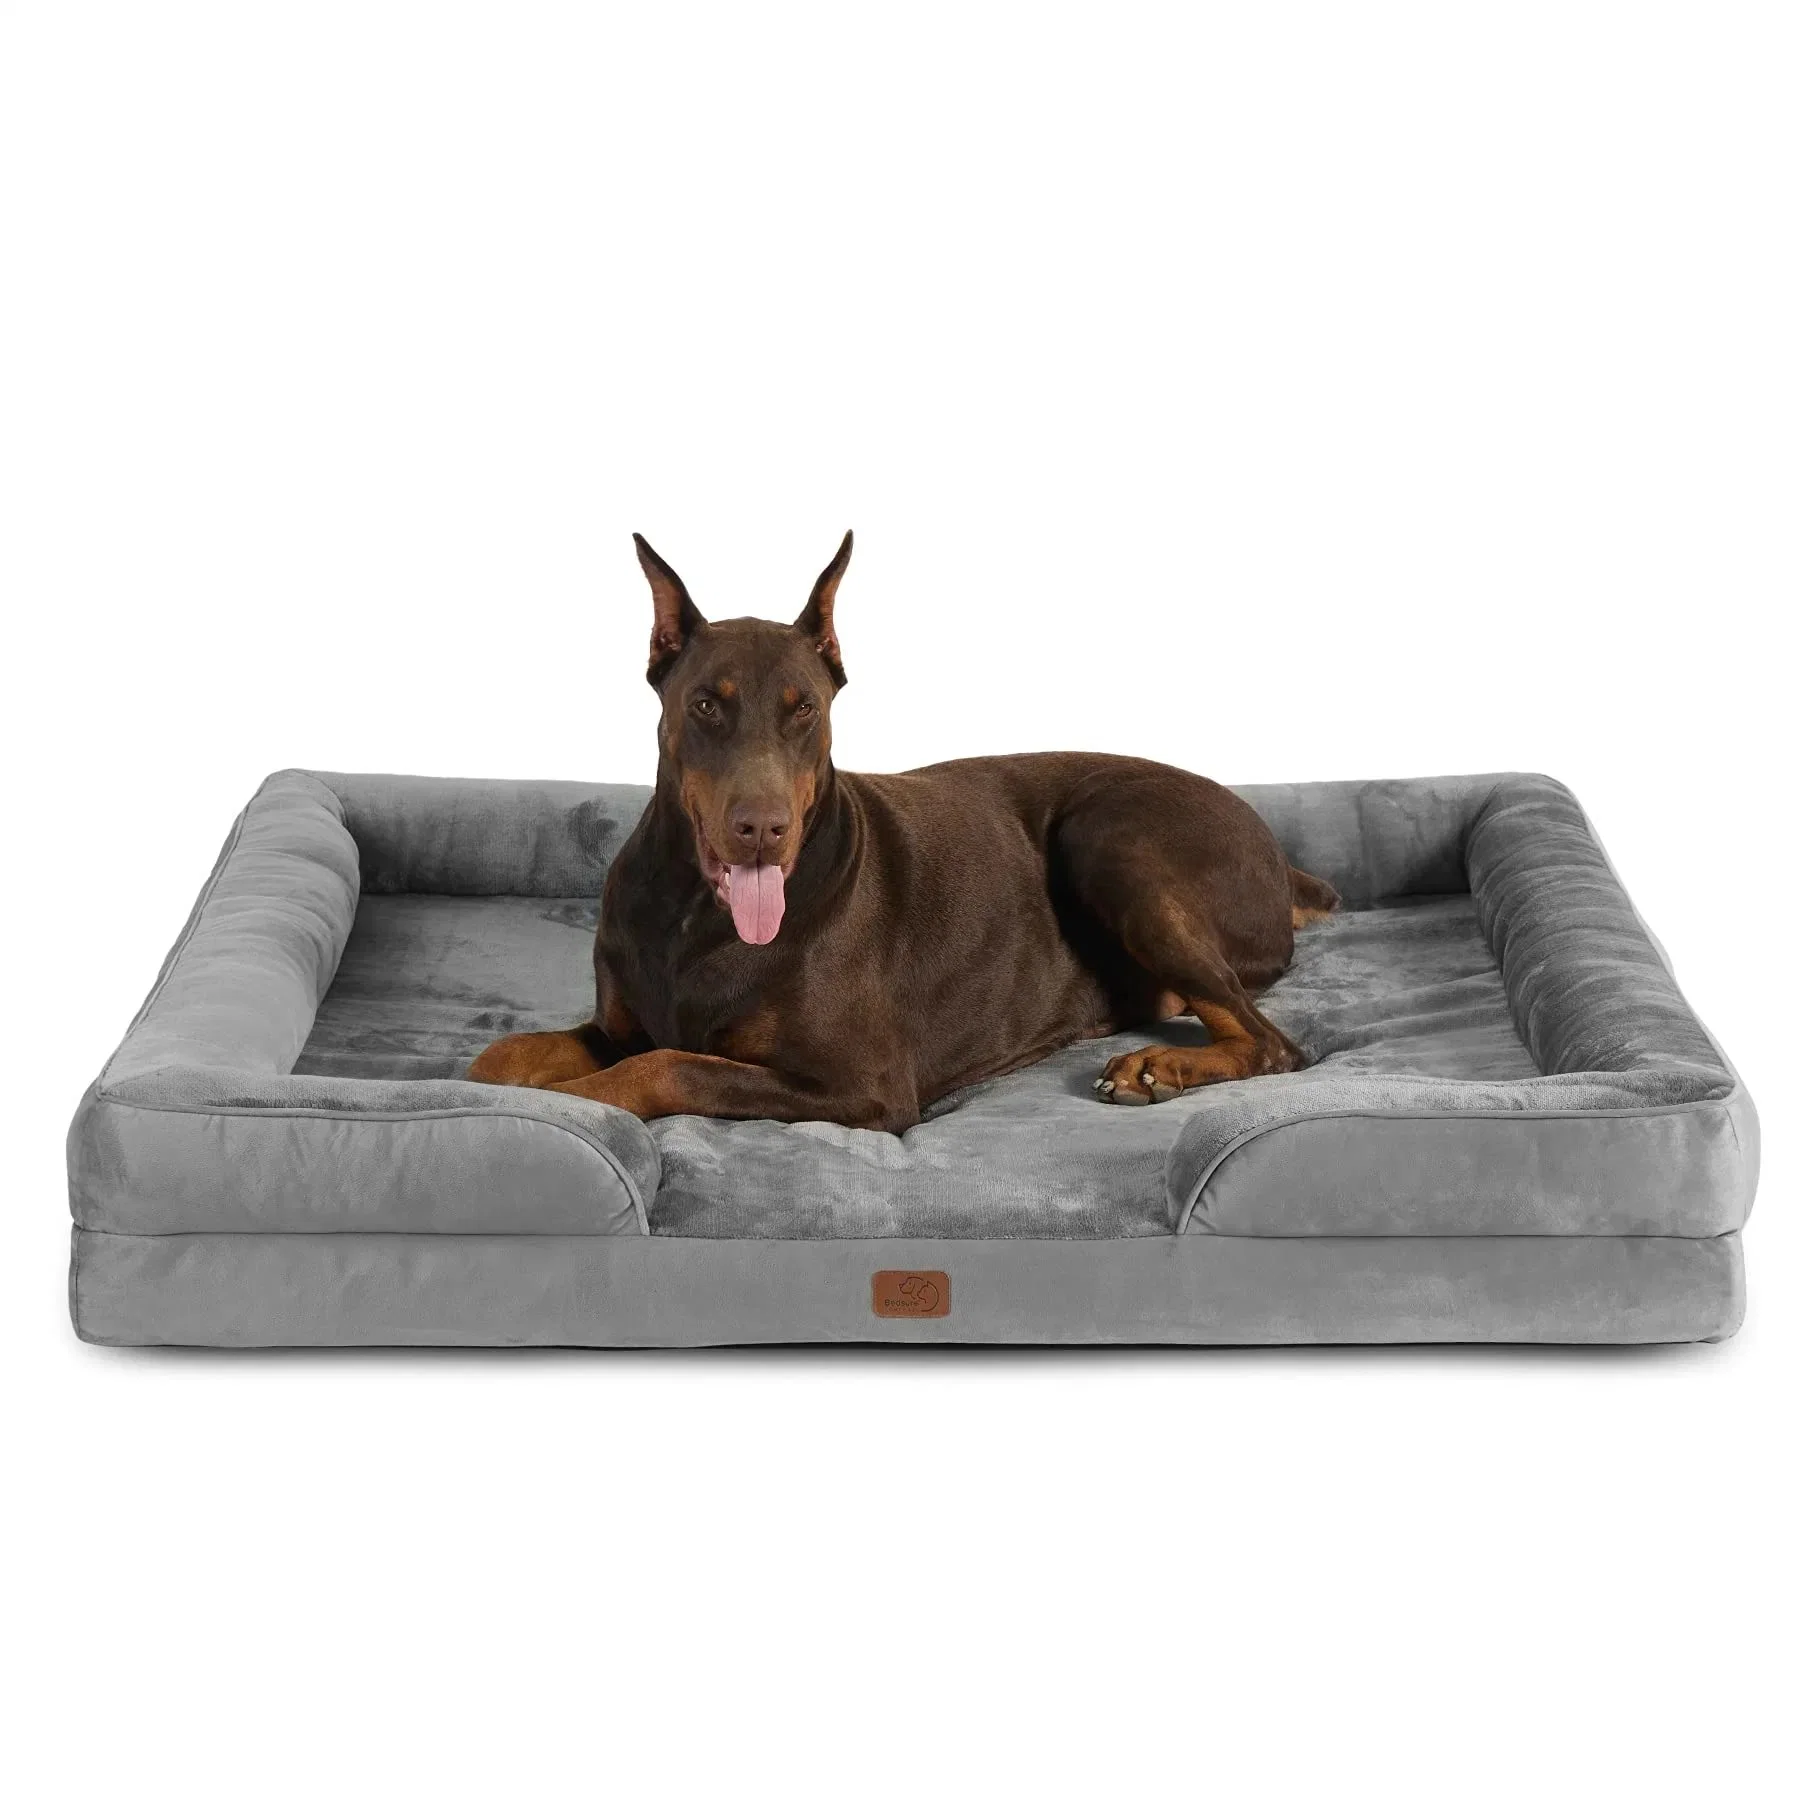 Bedsure Jumbo Orthopedic Dog Bed Great Dane Dog Beds for Giant Dogs